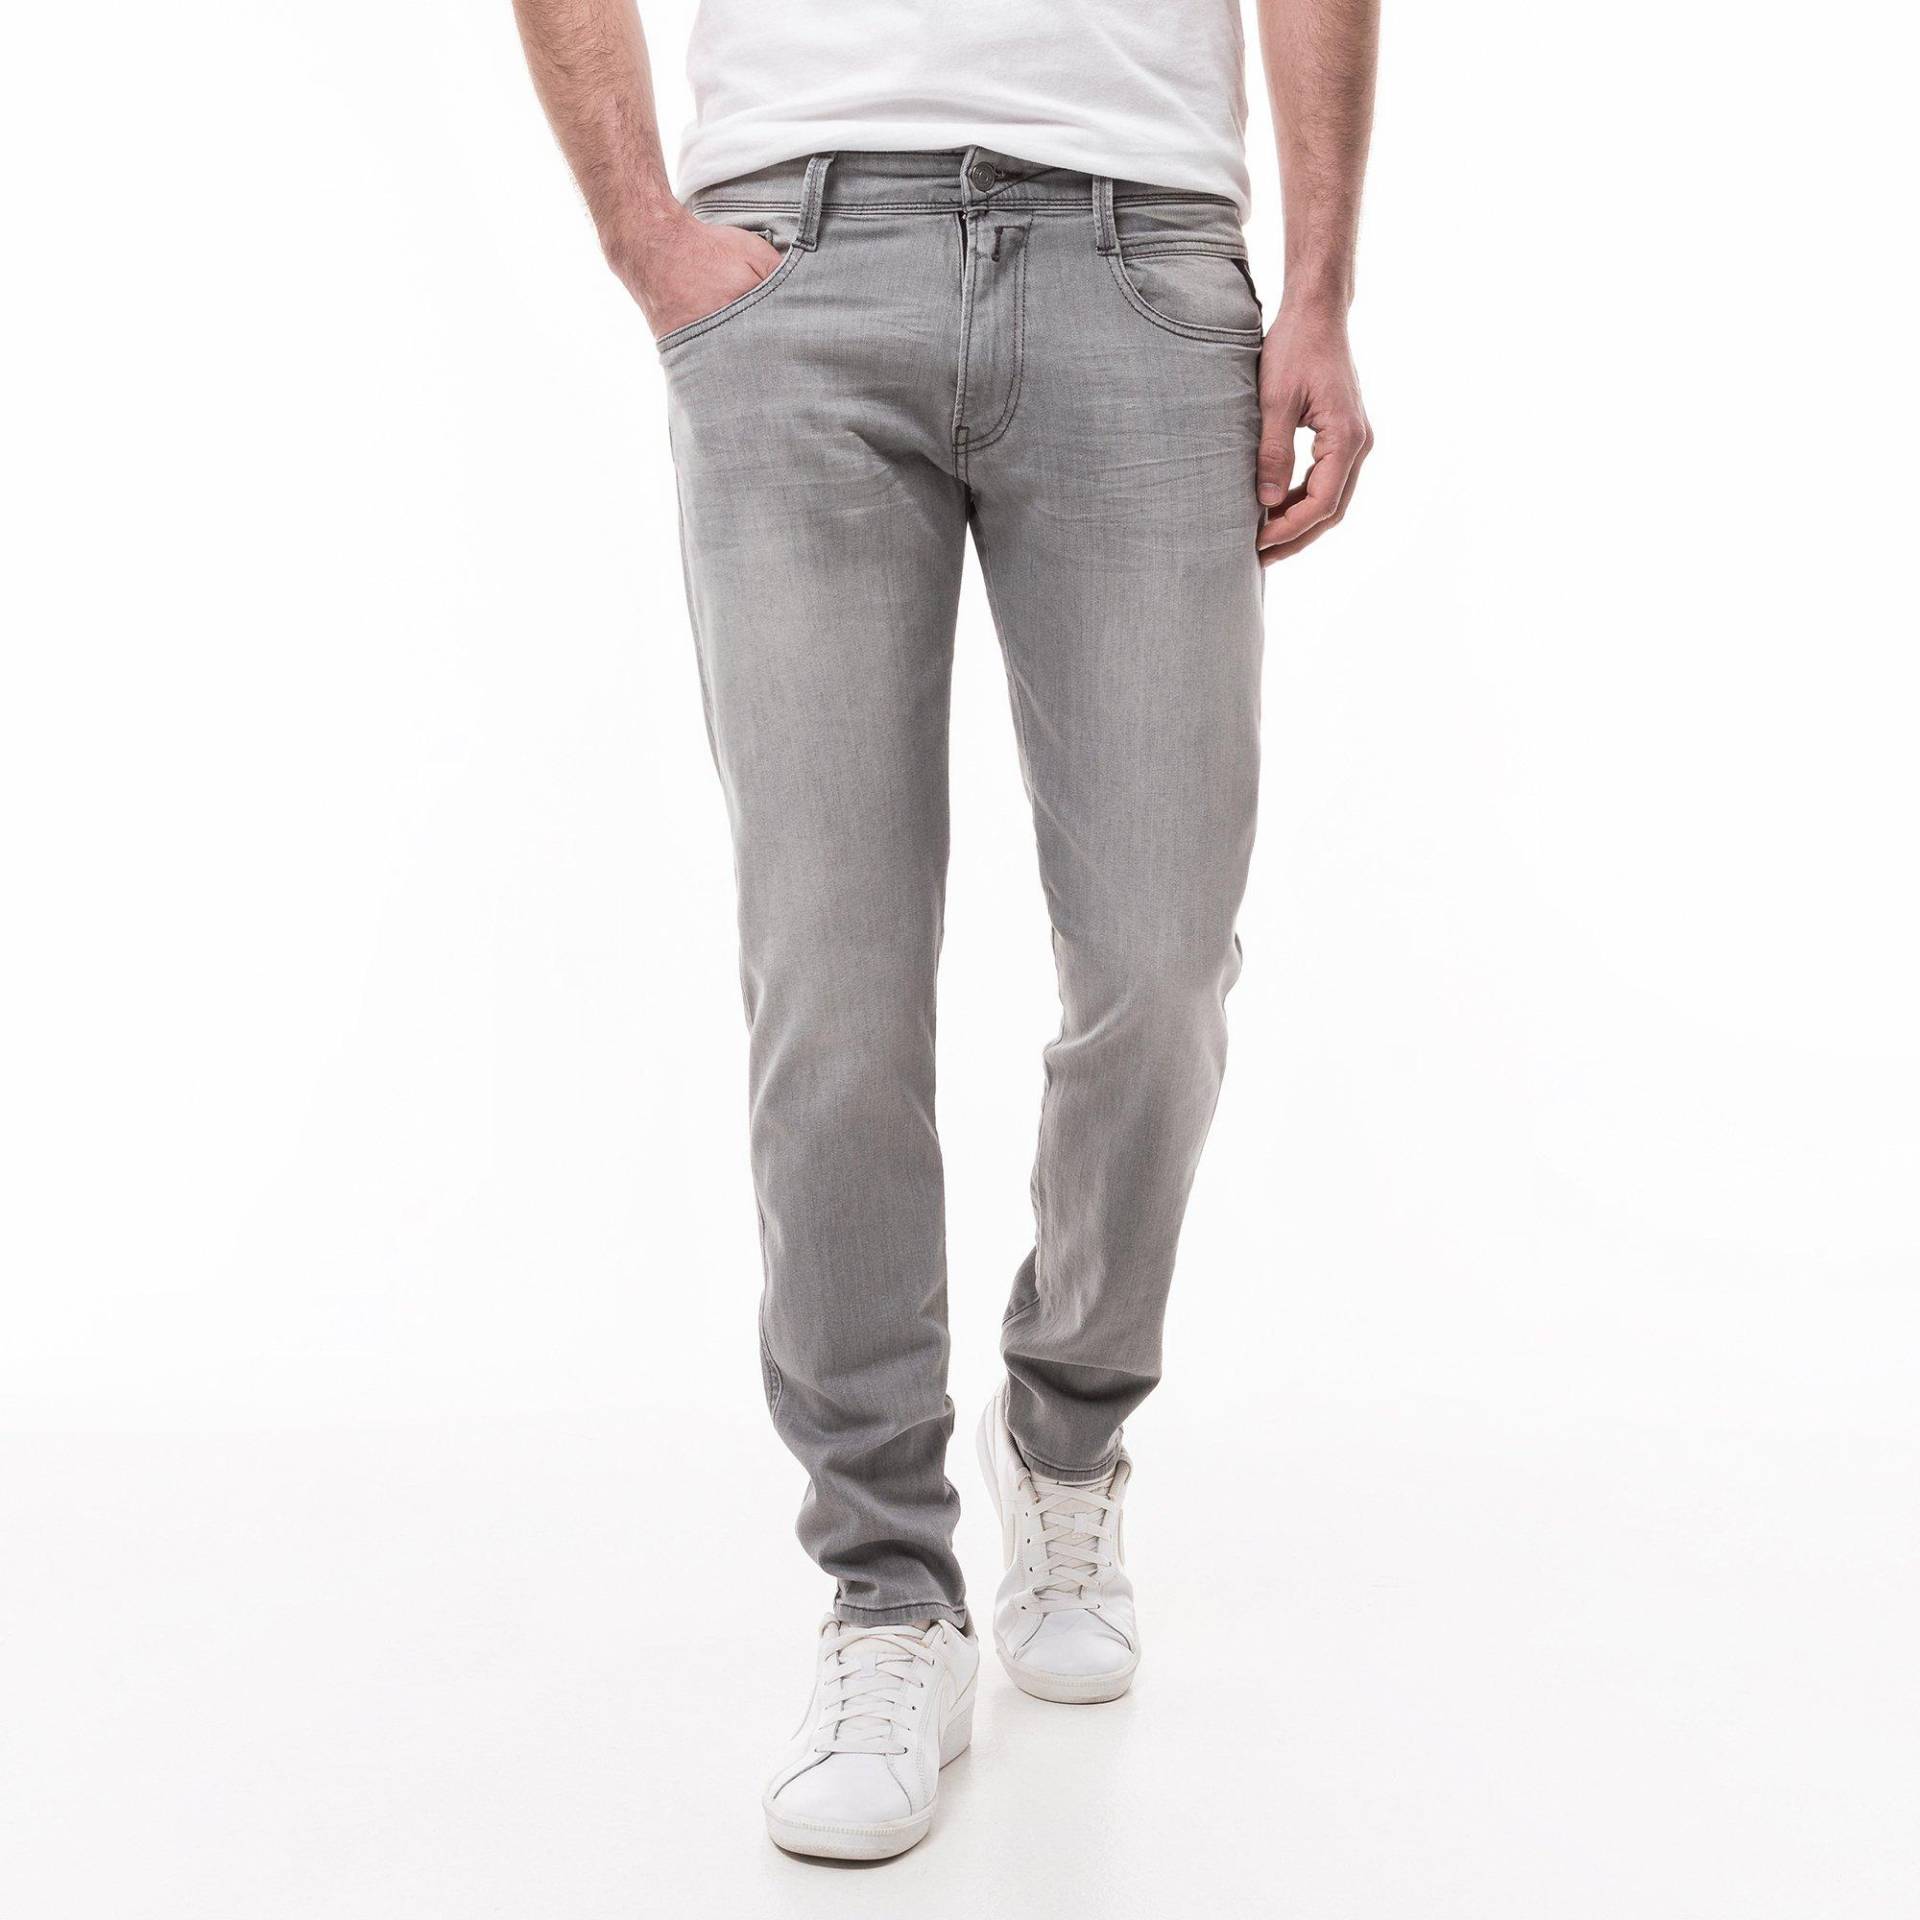 Jeans, Slim Fit Herren Grau L30/W34 von REPLAY